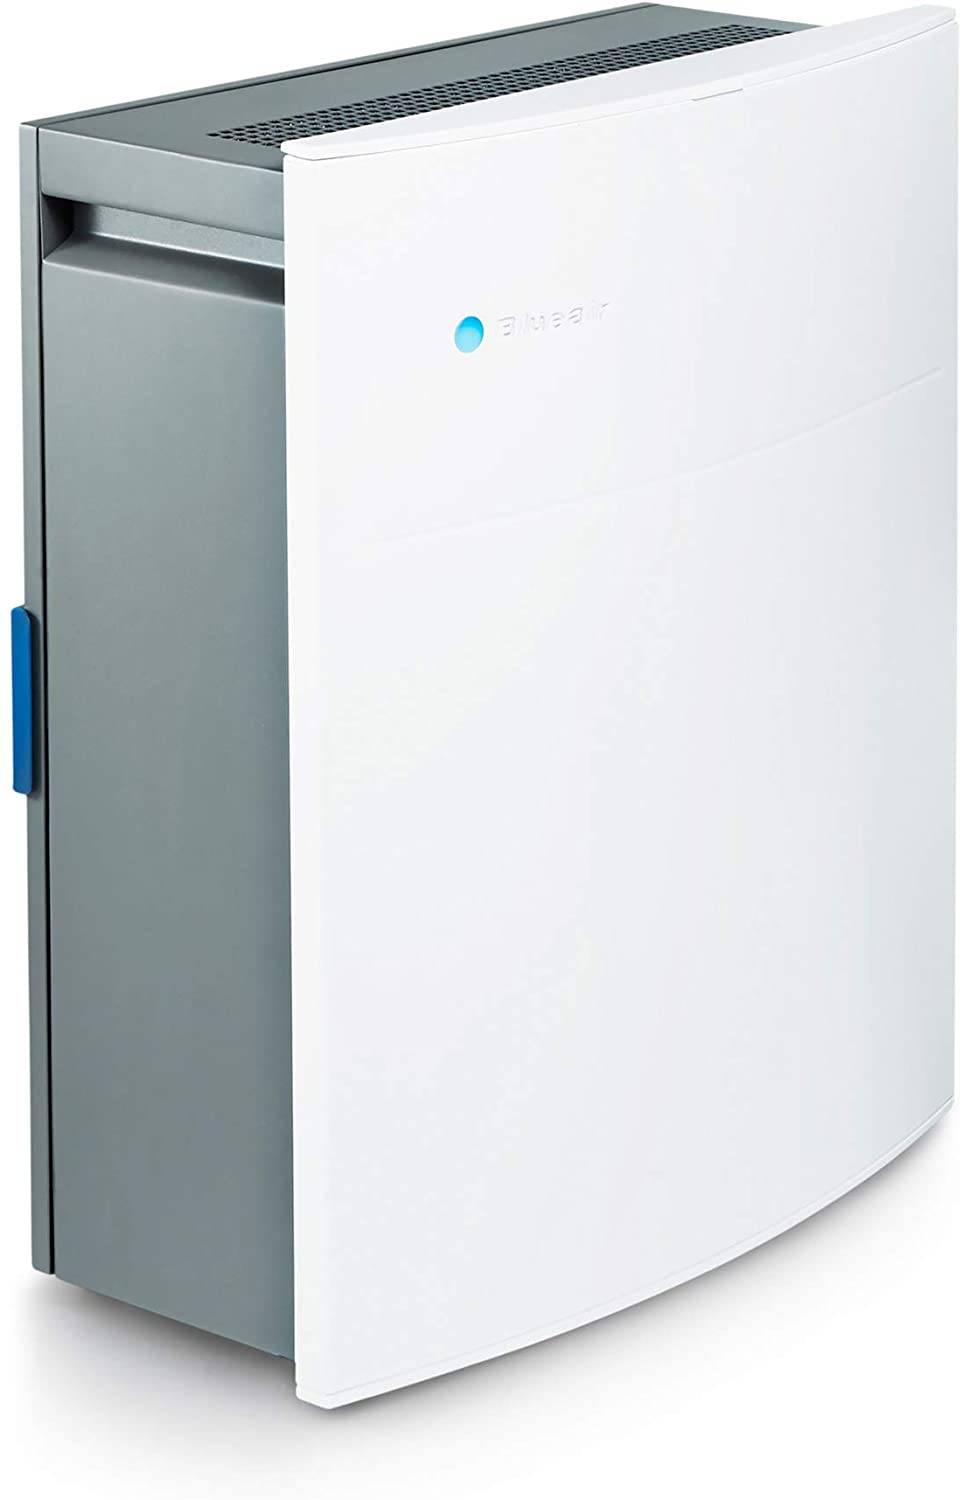 Blueair Classic 205 Air Purifier - HEPA Air Filters for the Home